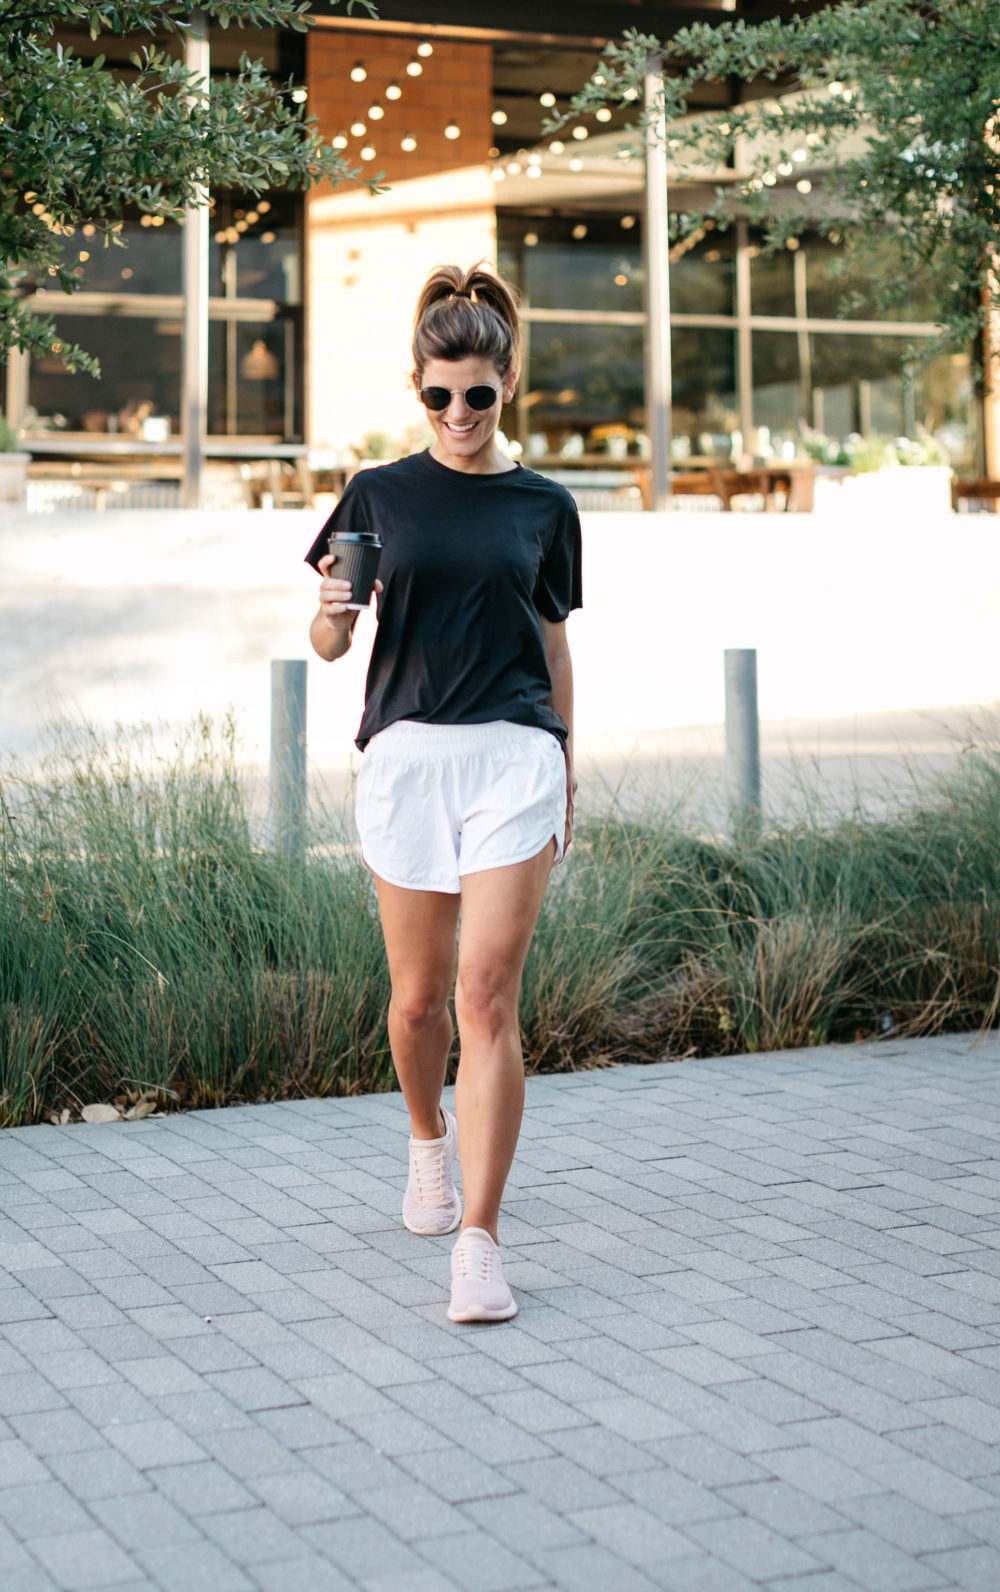 Lululemon 4" tracker shorts in white with black boyfriend tee